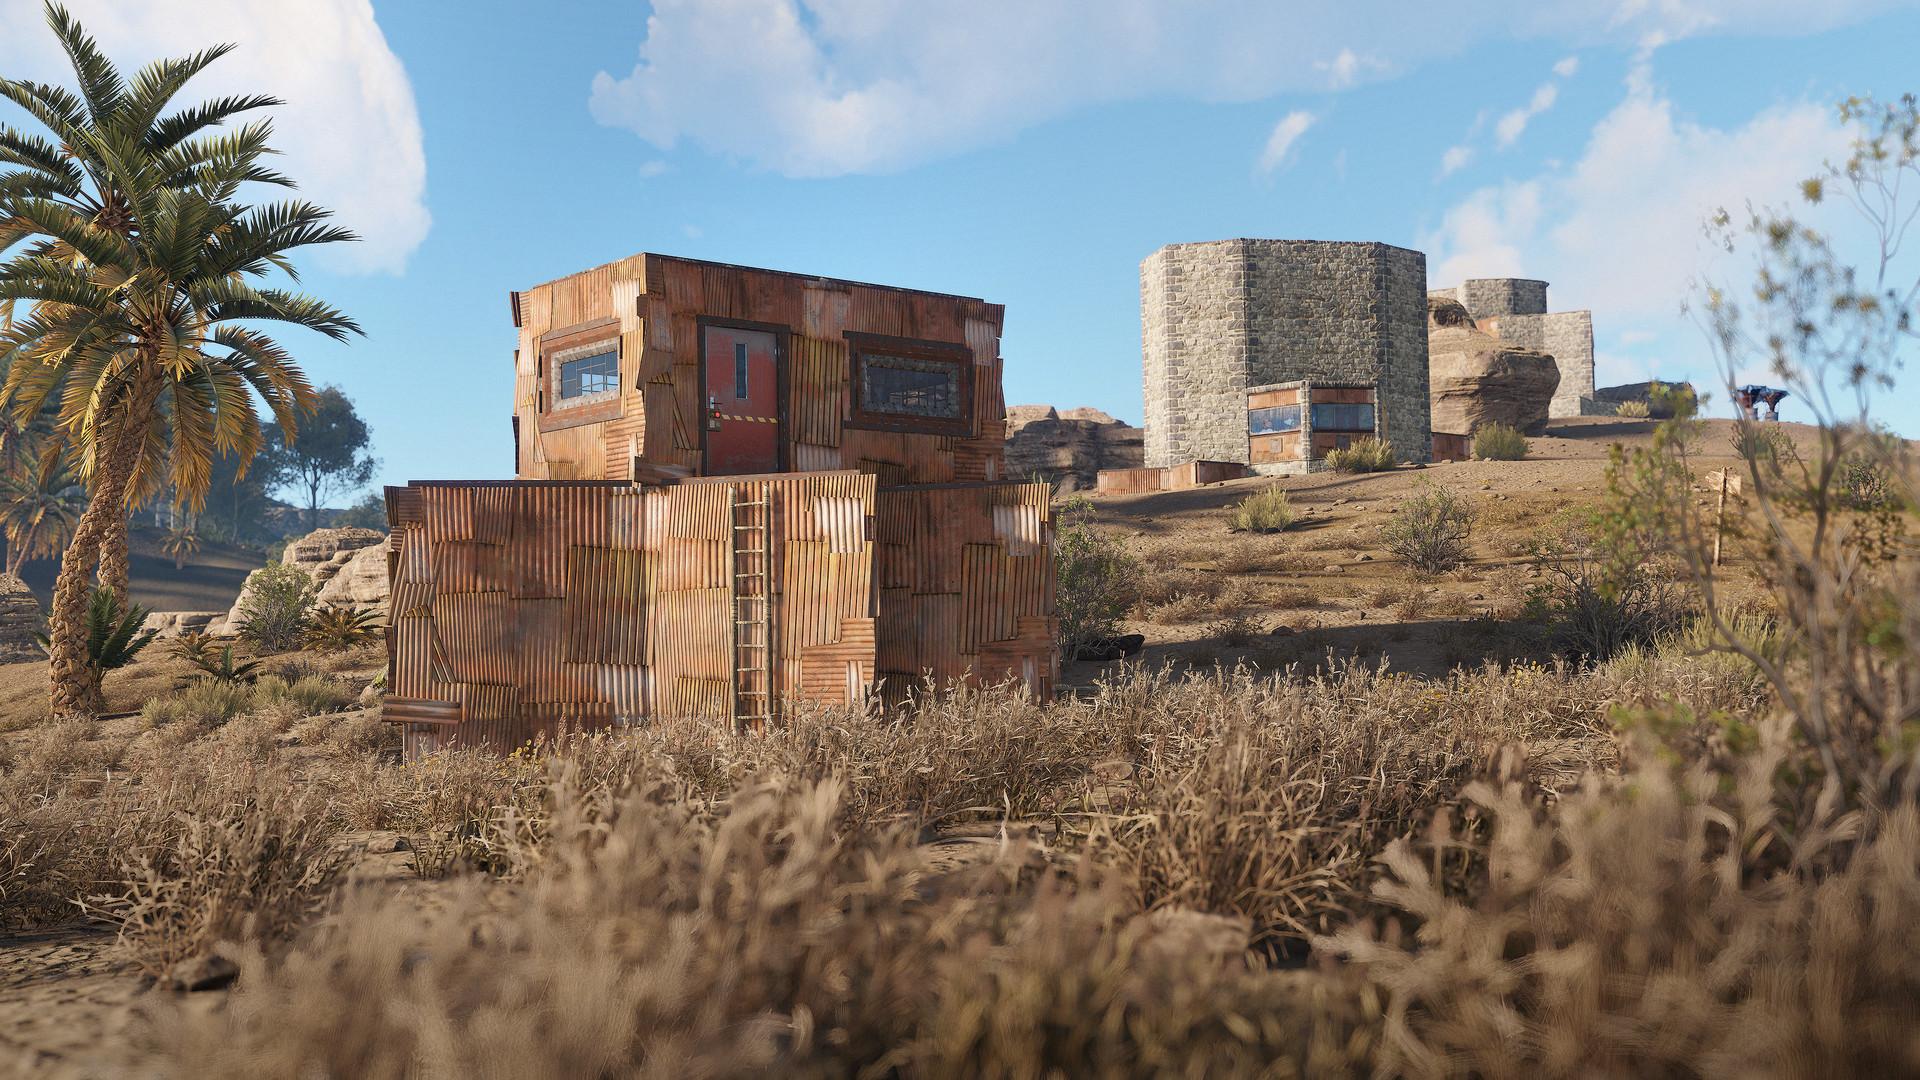 Screenshot №29 from game Rust